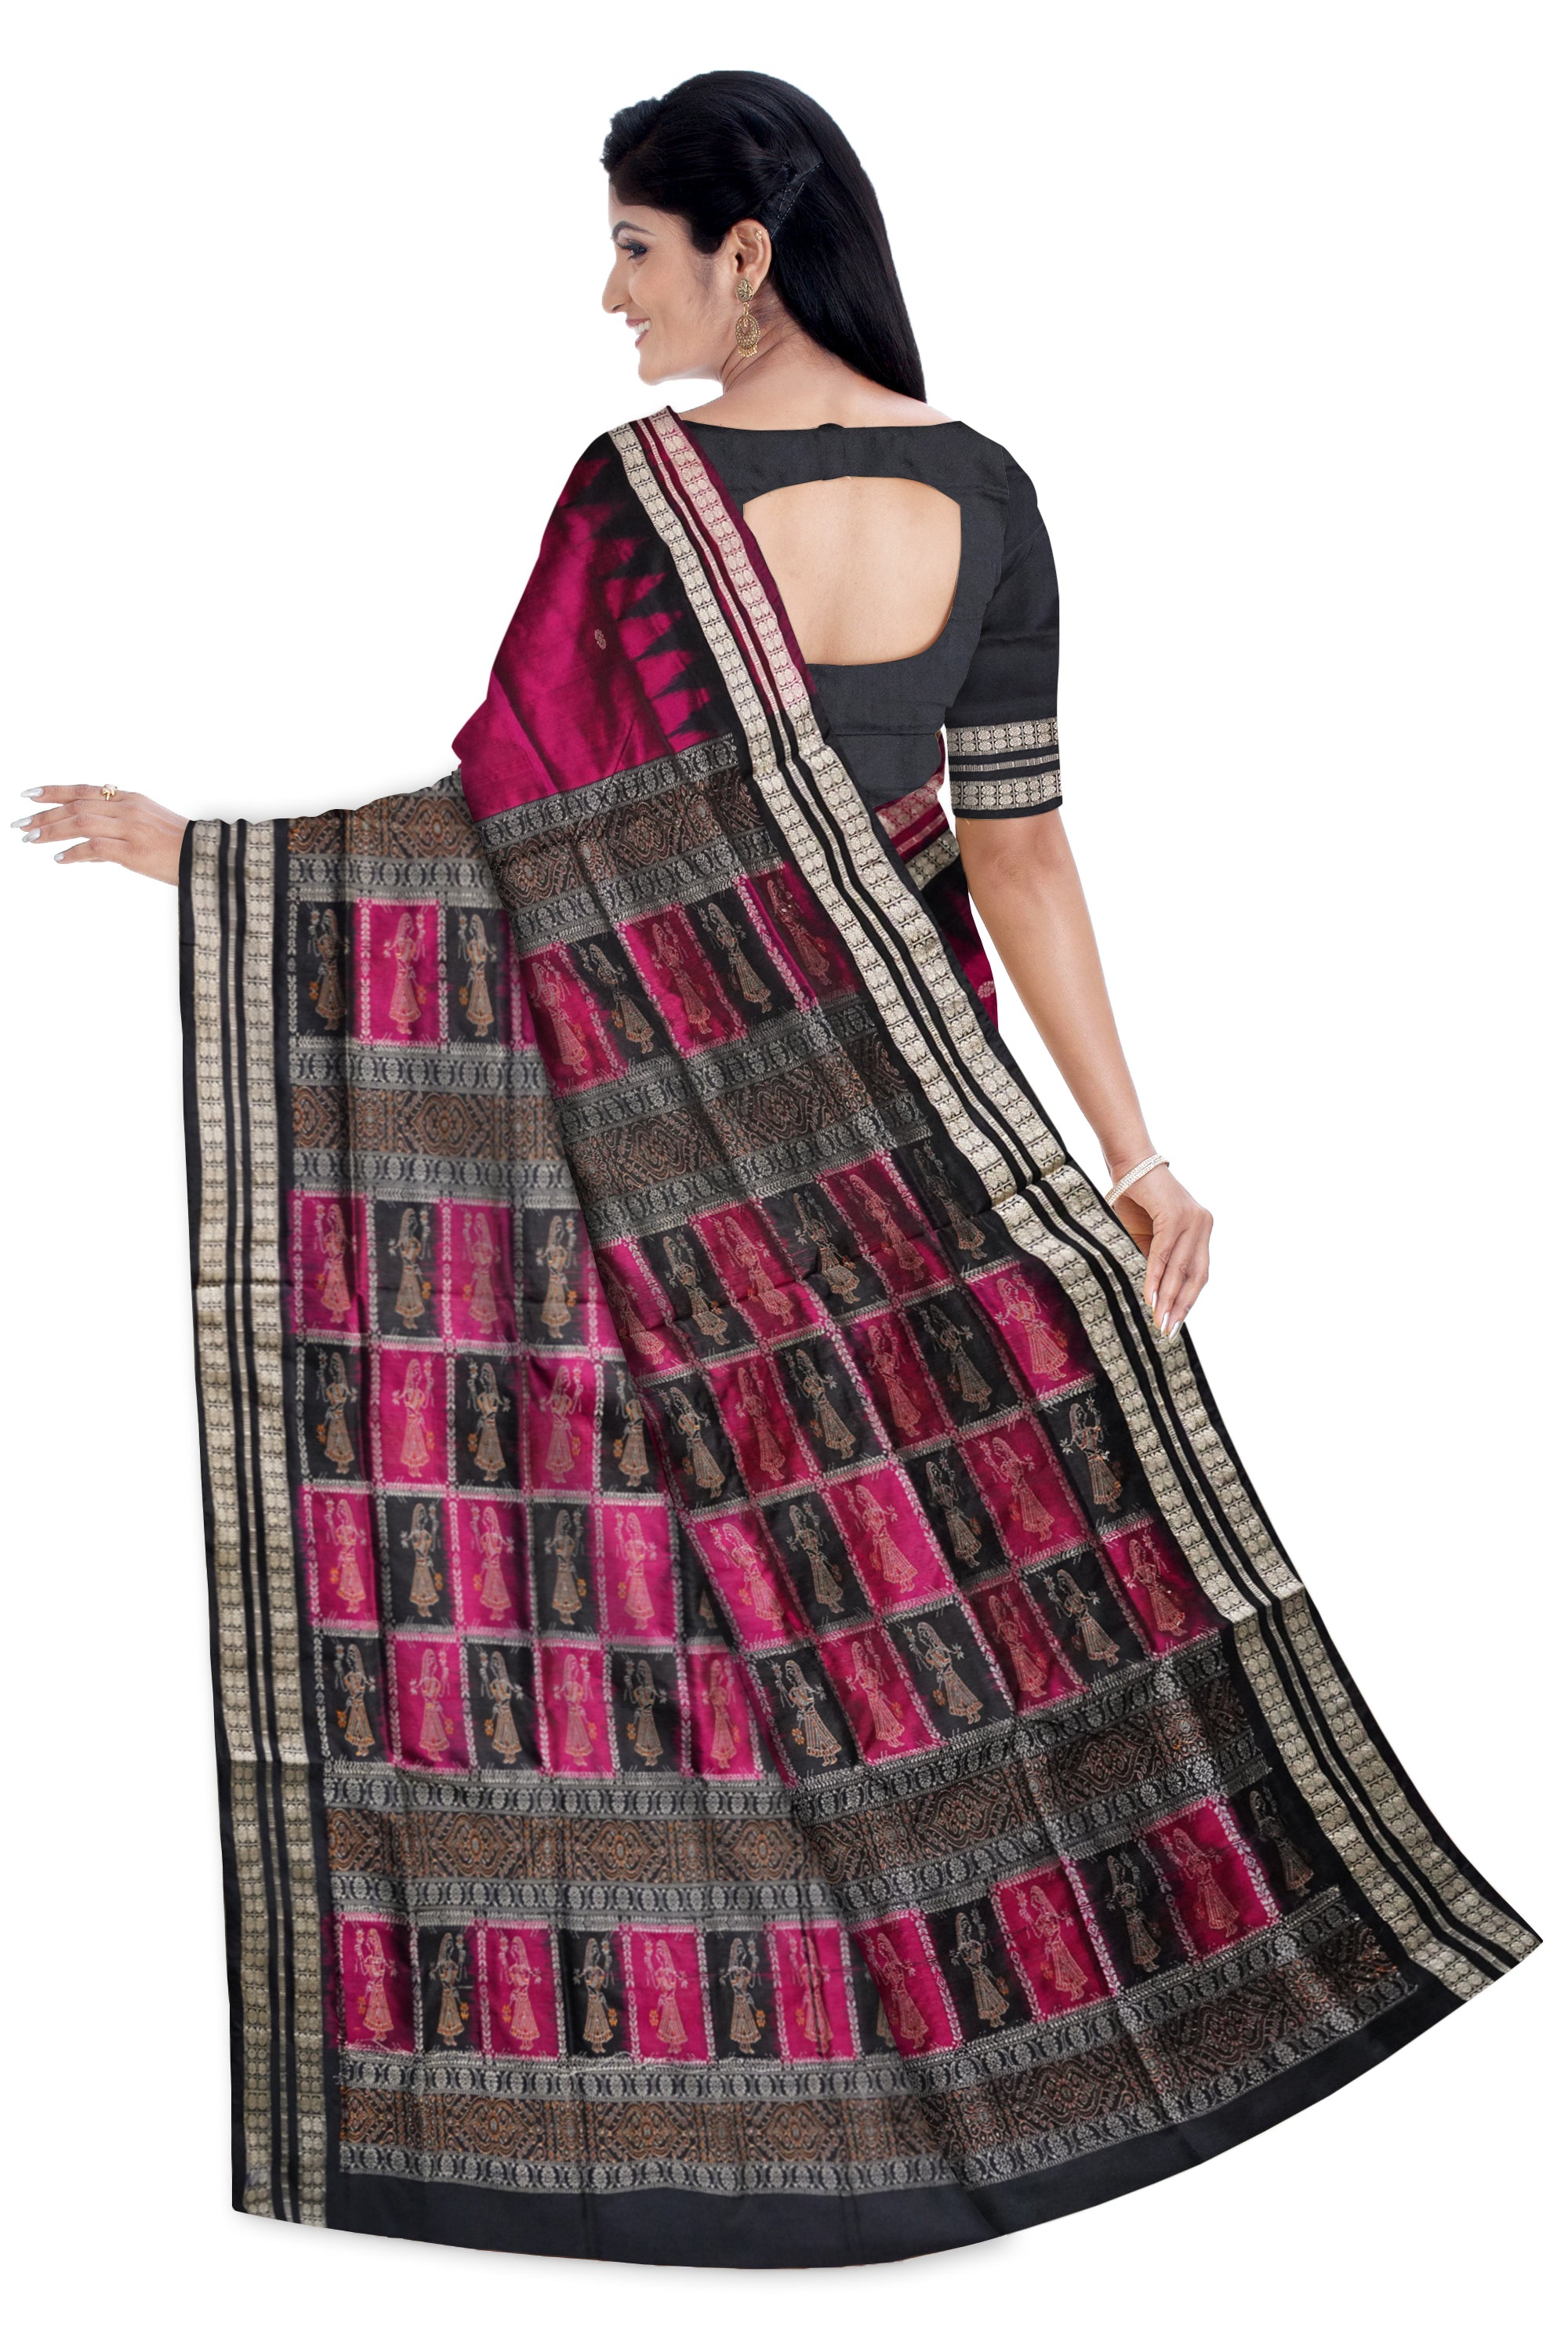 Deep pink & Black color full body with pallu doll pattern pata saree. - Koshali Arts & Crafts Enterprise